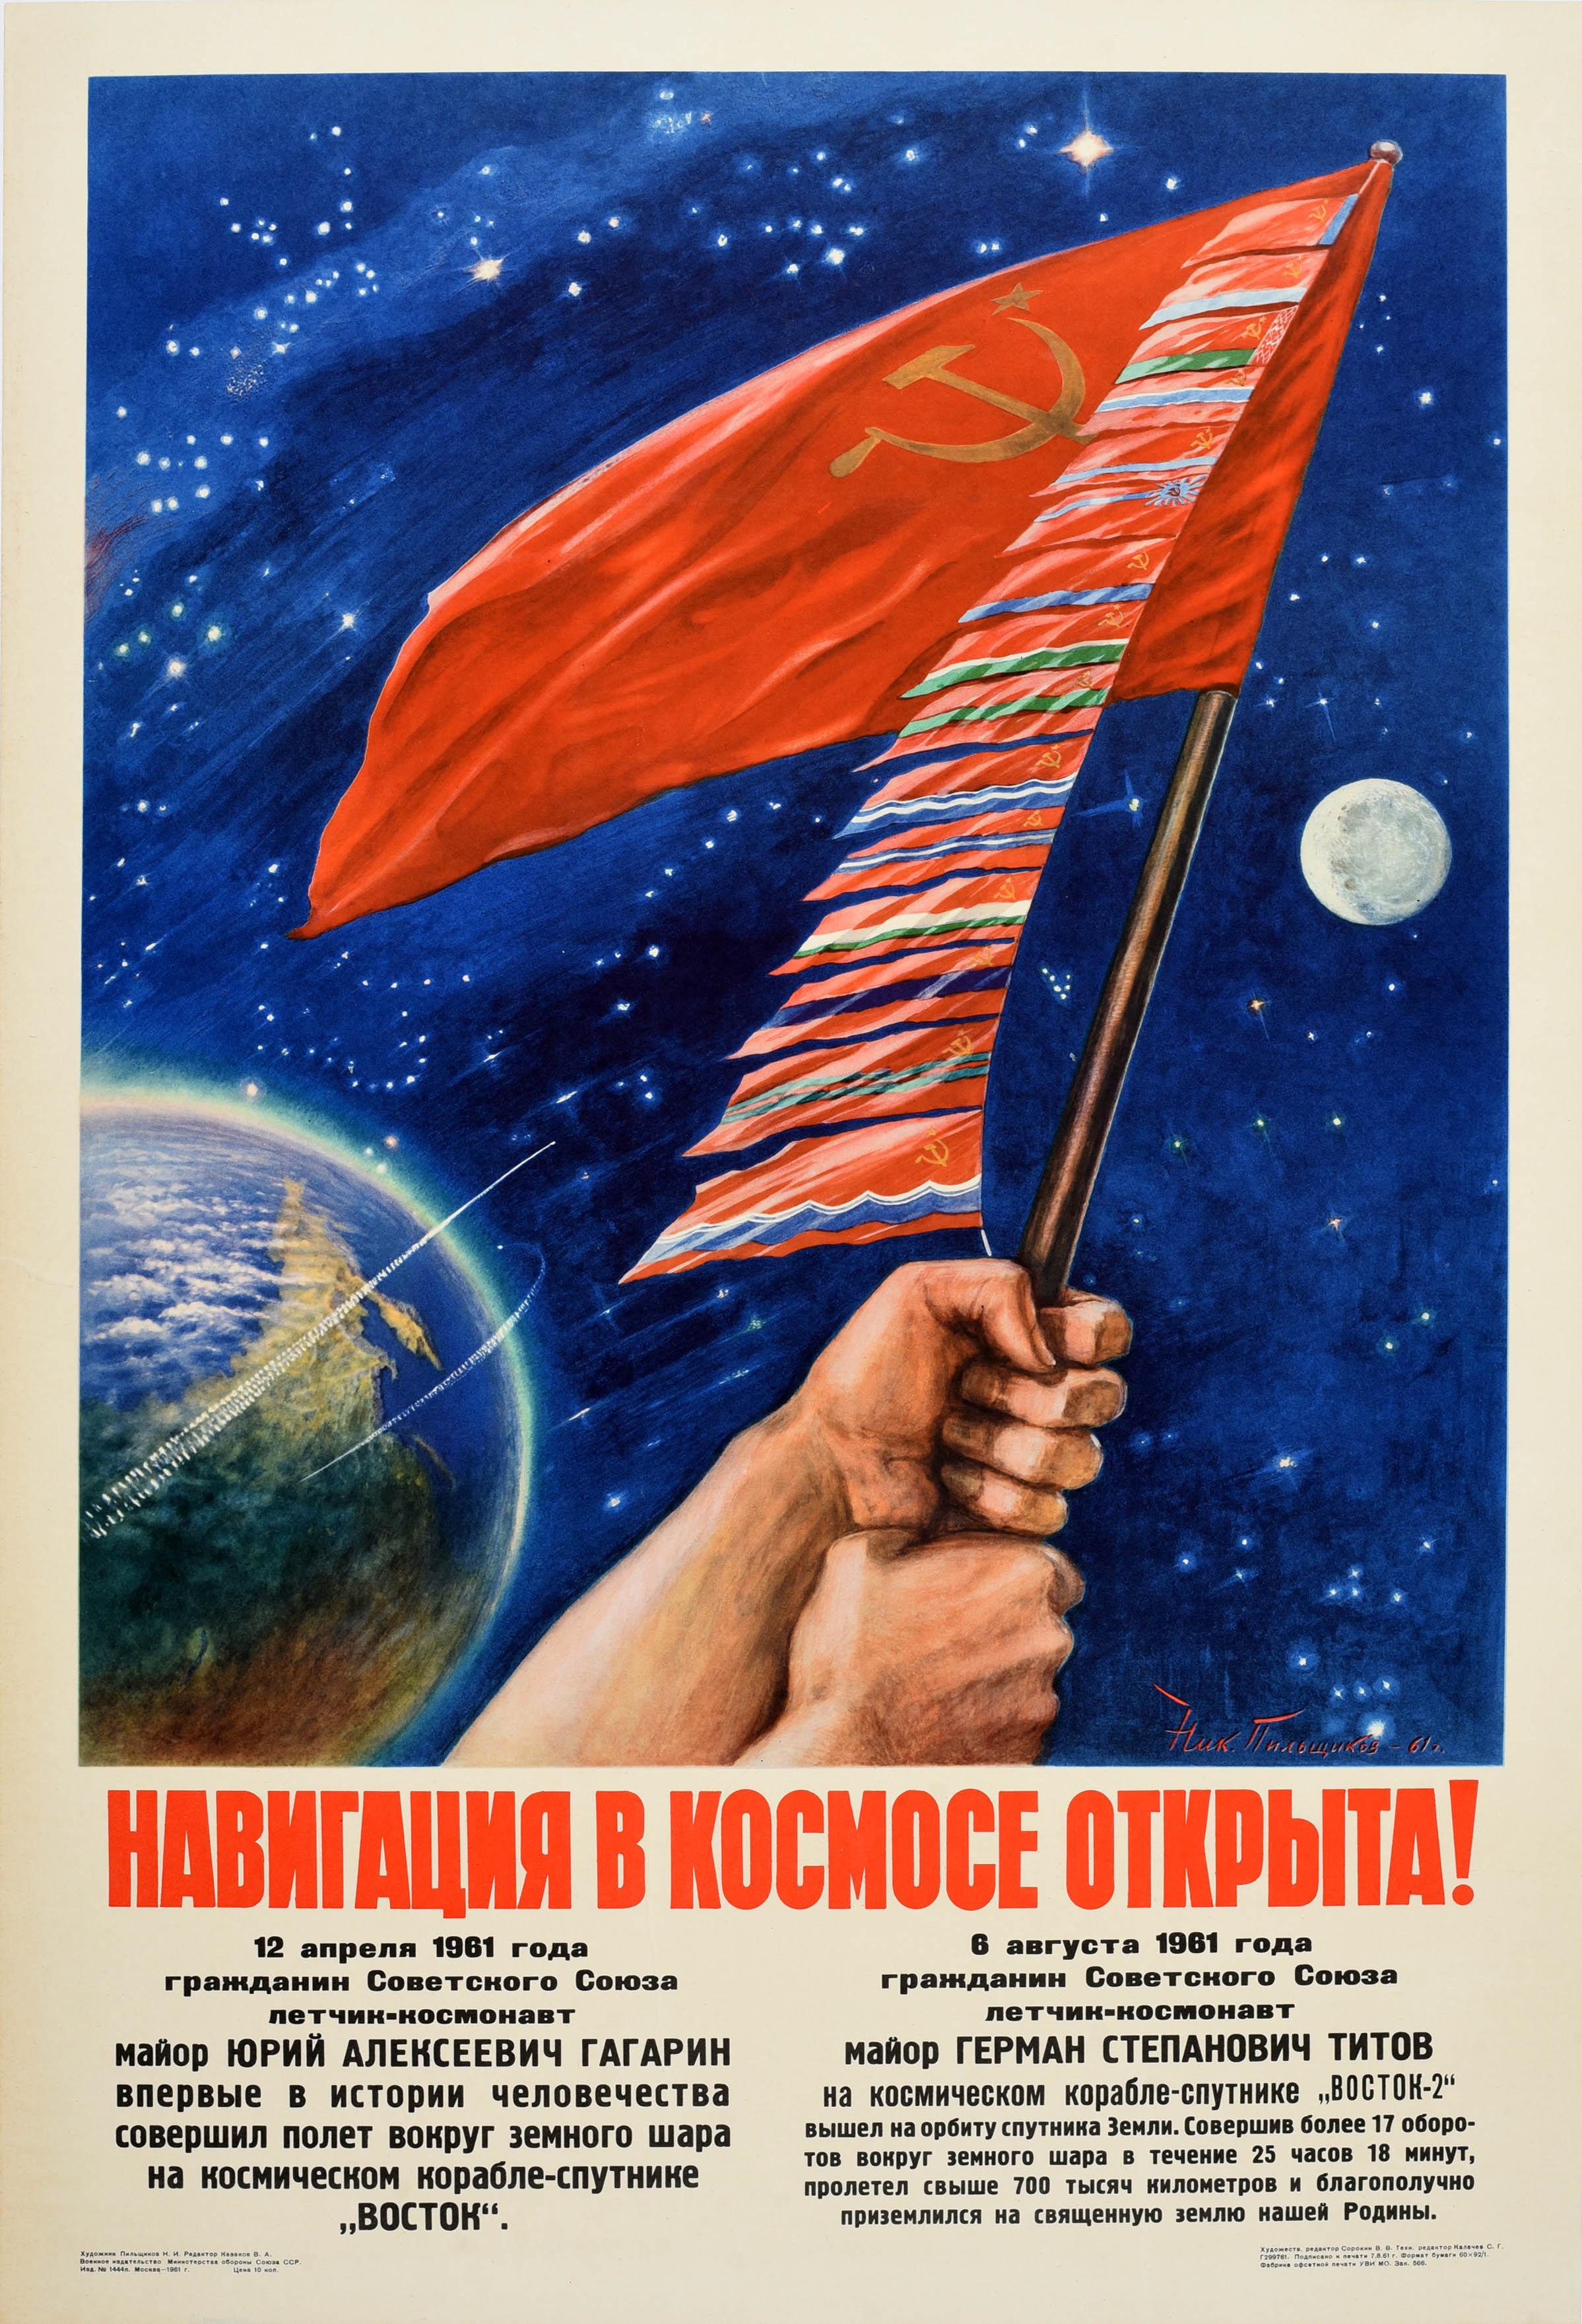 Pilshchikov Print - Original Vintage Poster Navigation In Open Space Race Kosmos USSR Gagarin Titov